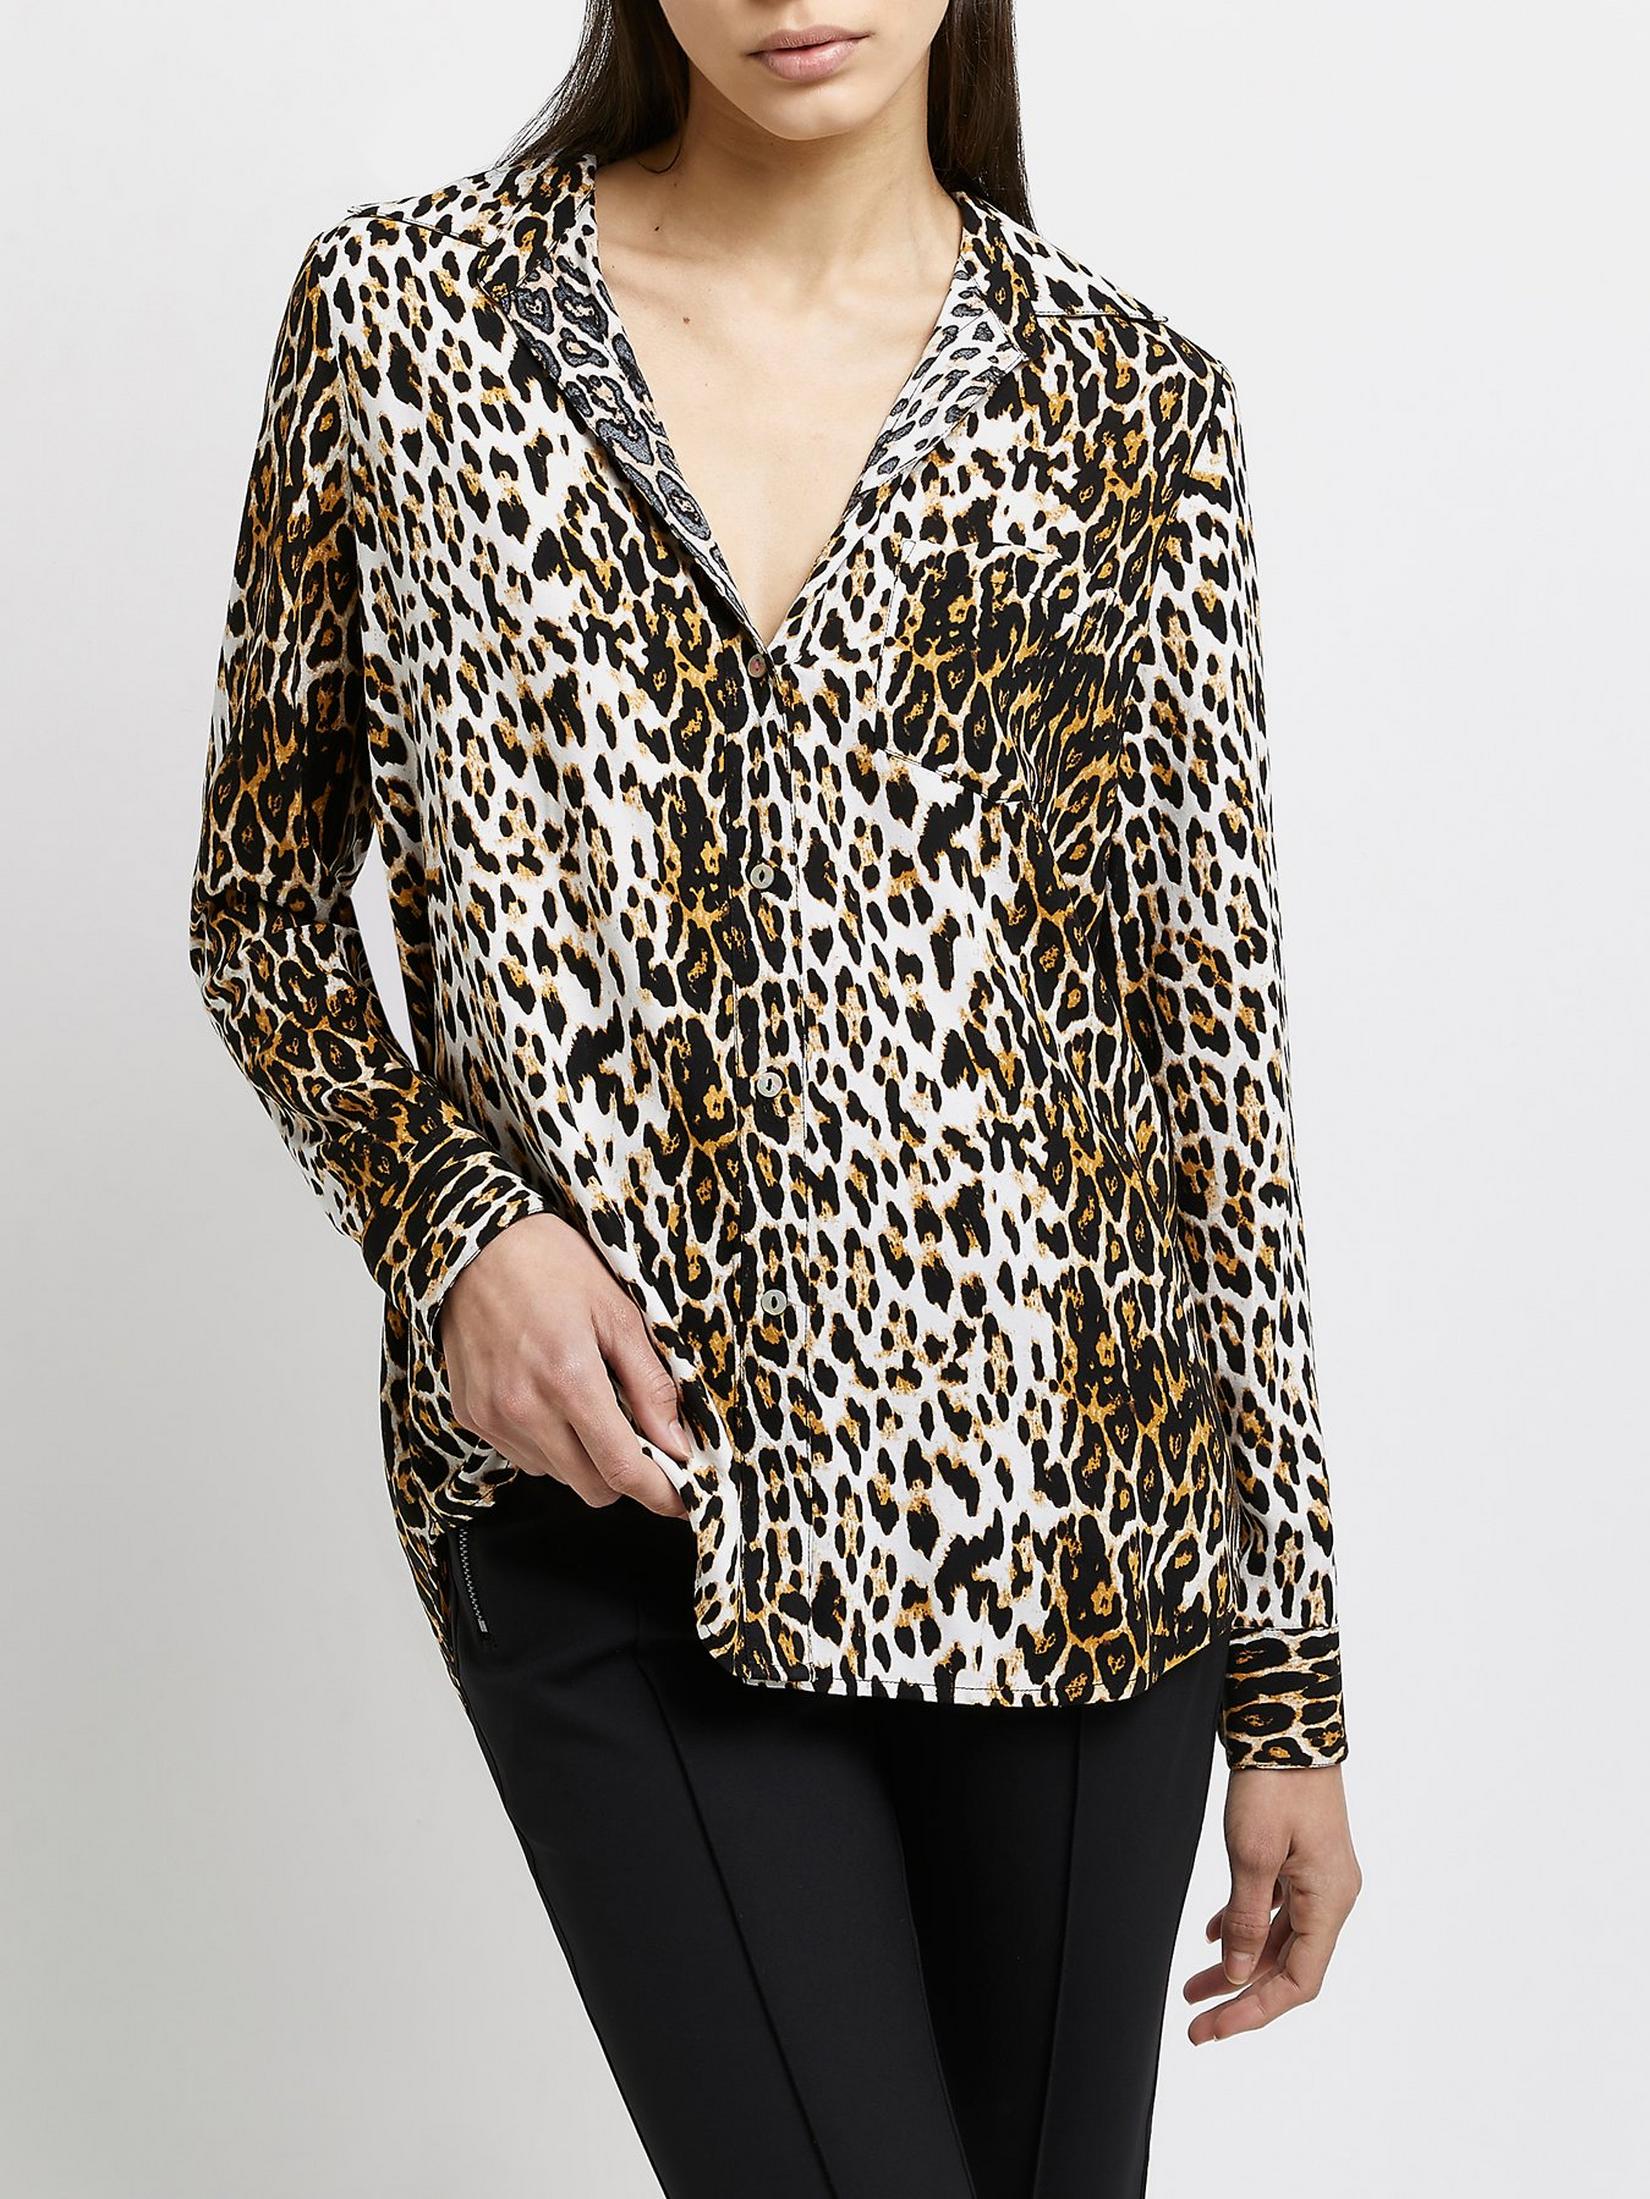 River Island Women's Leopard Print  Shirts UVU5U FE560(shr)